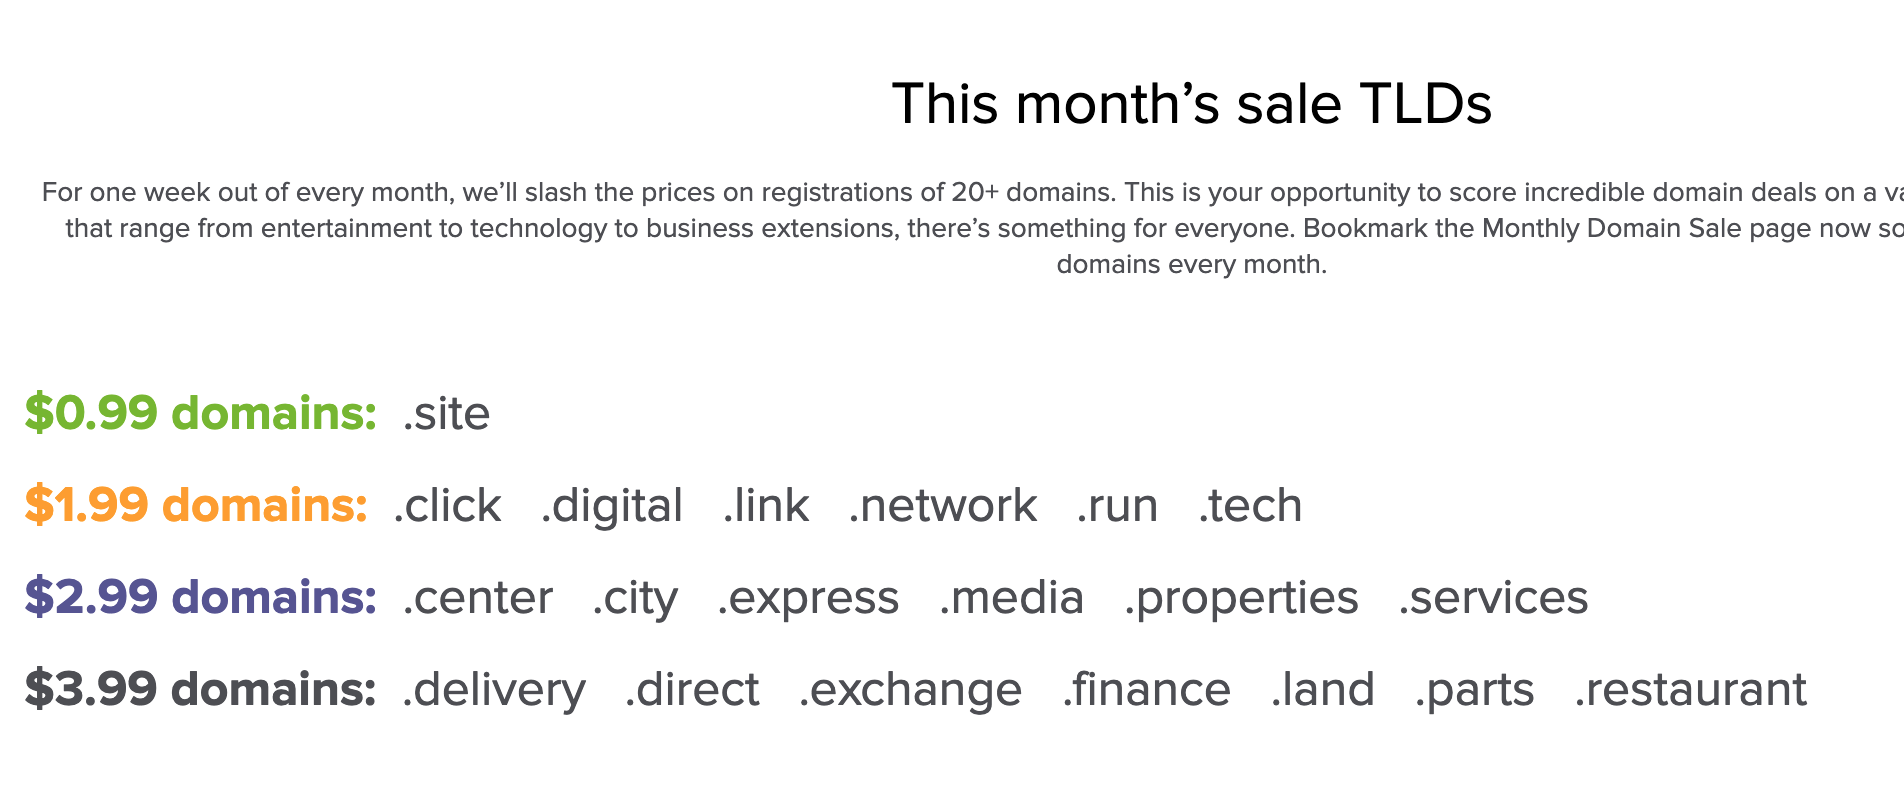 Name.com每月都有特价域名促销